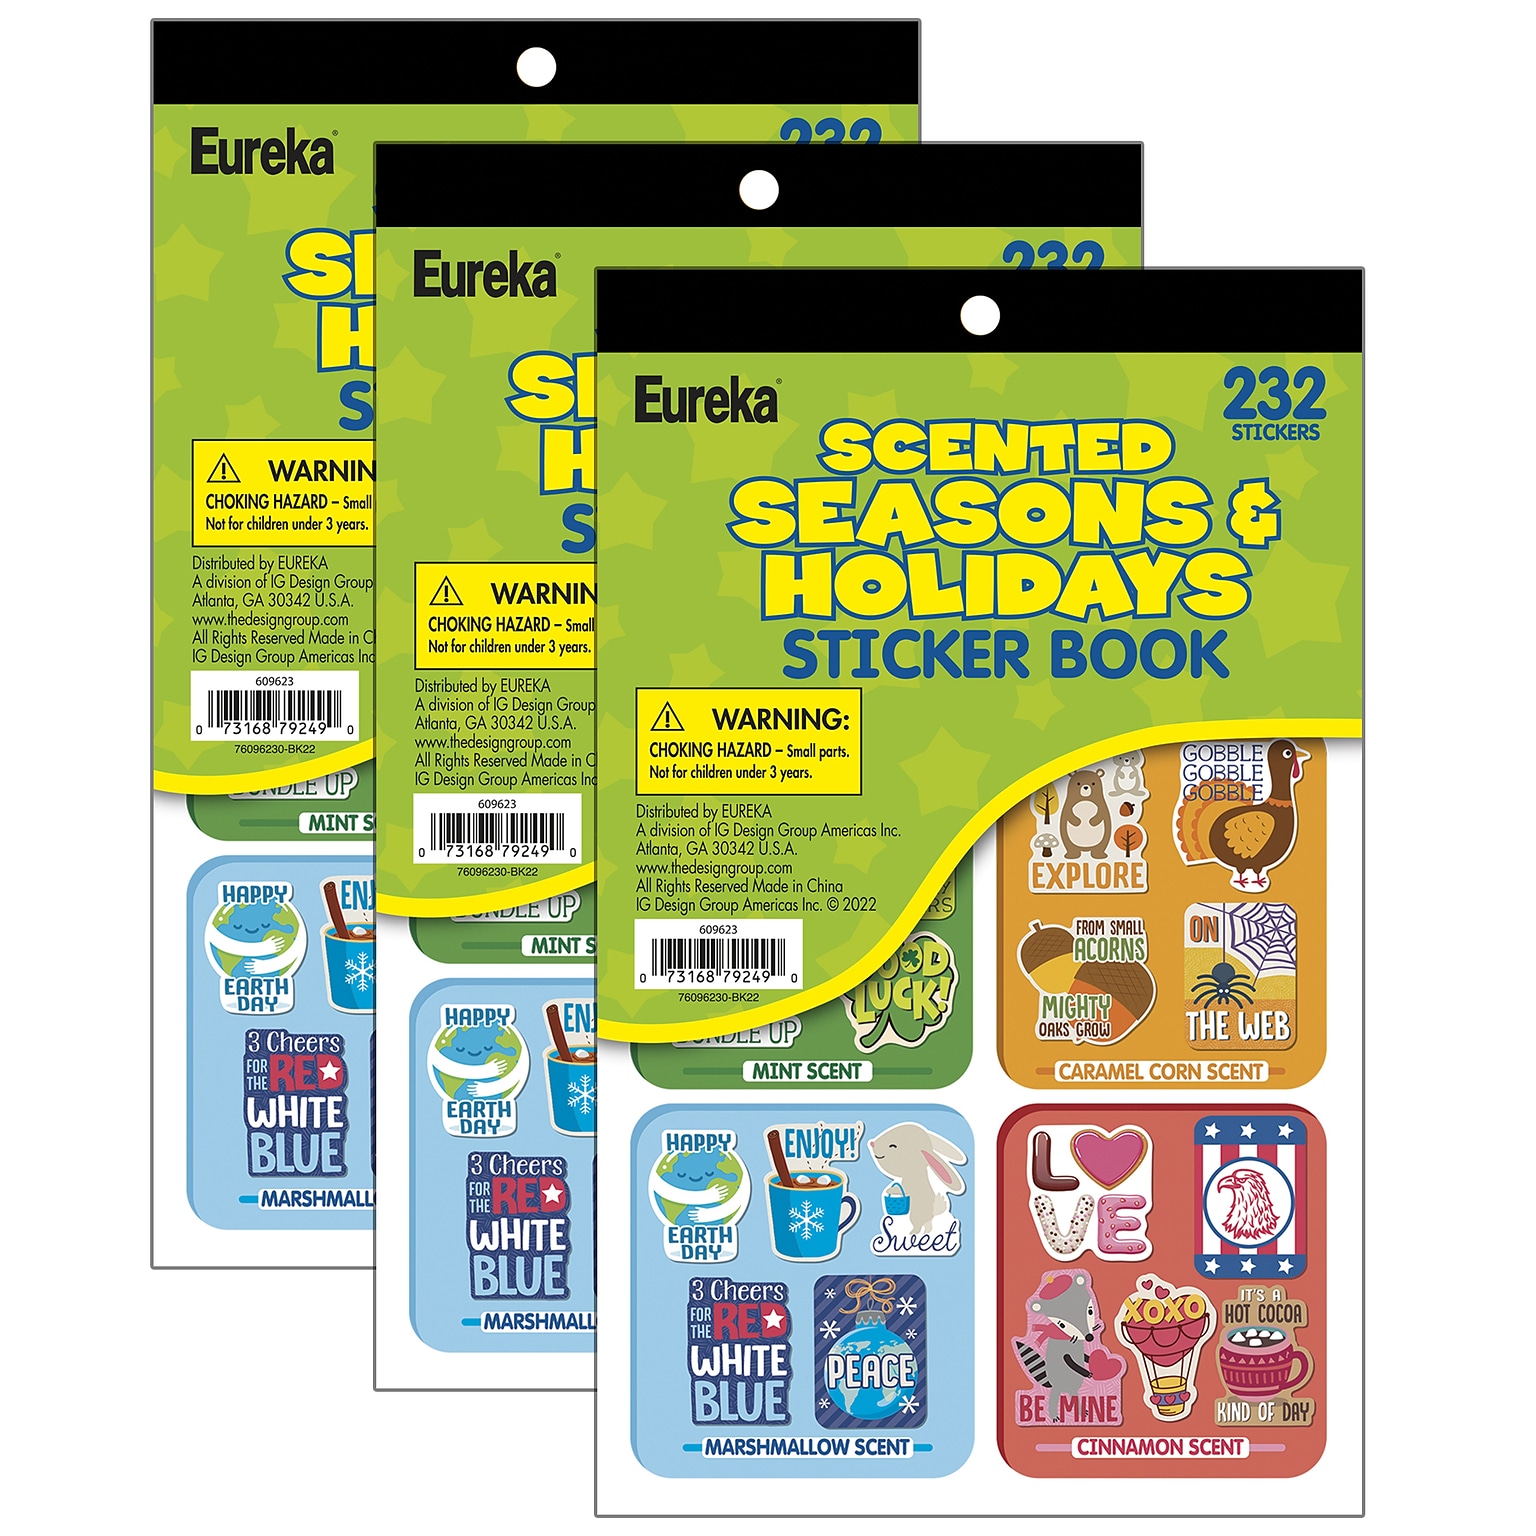 Eureka Seasons & Holidays Scented Sticker Book, Multicolored, 232 Stickers Per Book, Pack of 3 (EU-609623-3)